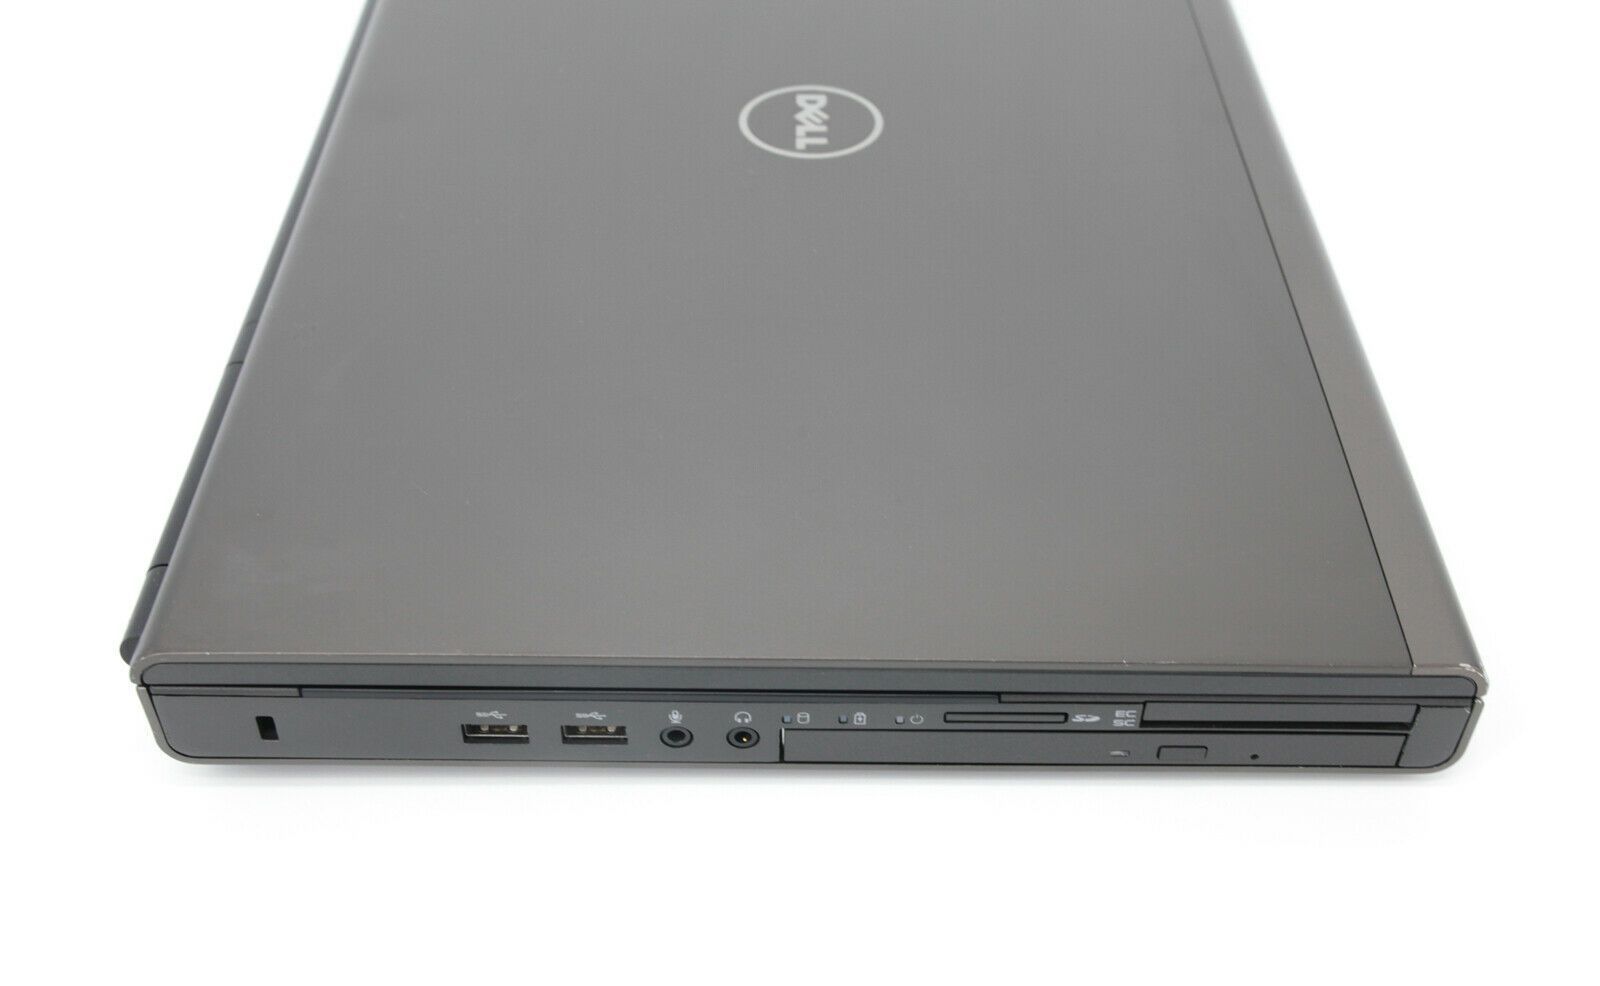 Dell Precision M6800 17" Laptop: Core i7-4600M 256GB+HDD 16GB RAM, Warranty VAT - CruiseTech